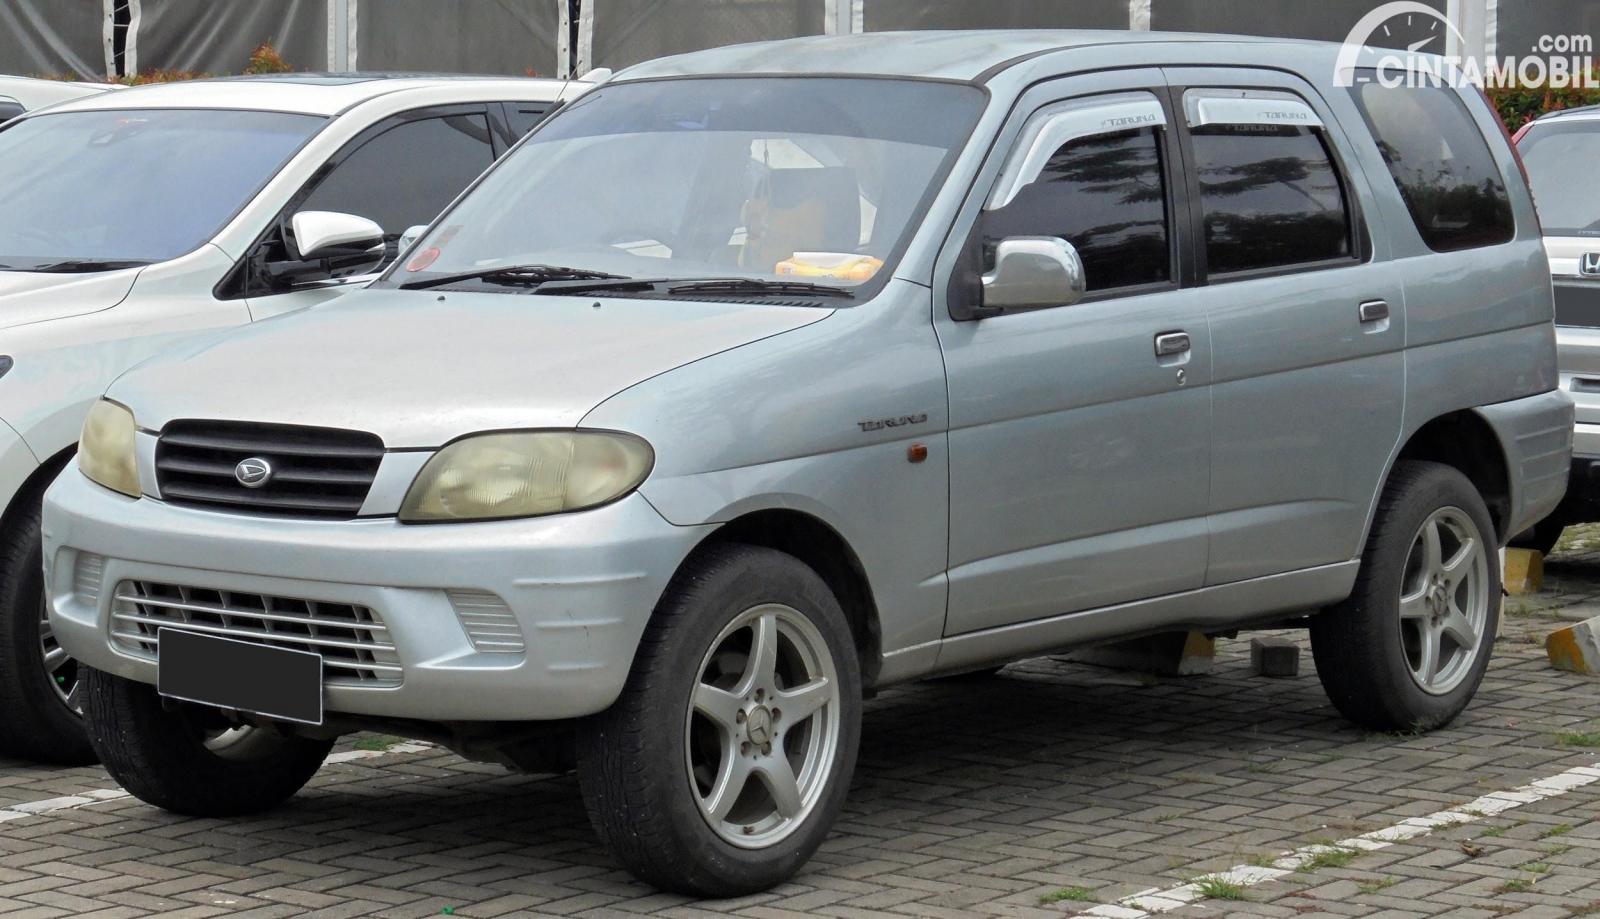 Gambar menunjukkan sebuah mobil Daihatsu Taruna berwarna biru dilihat dari sisi depan